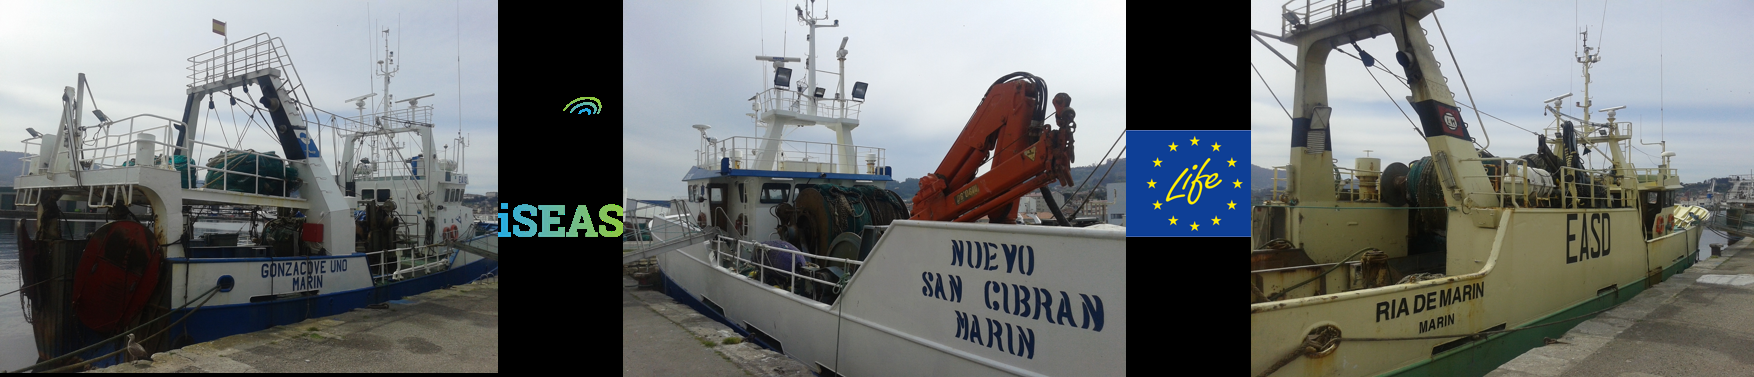 Descartes discards landing obligation fisheries pesca